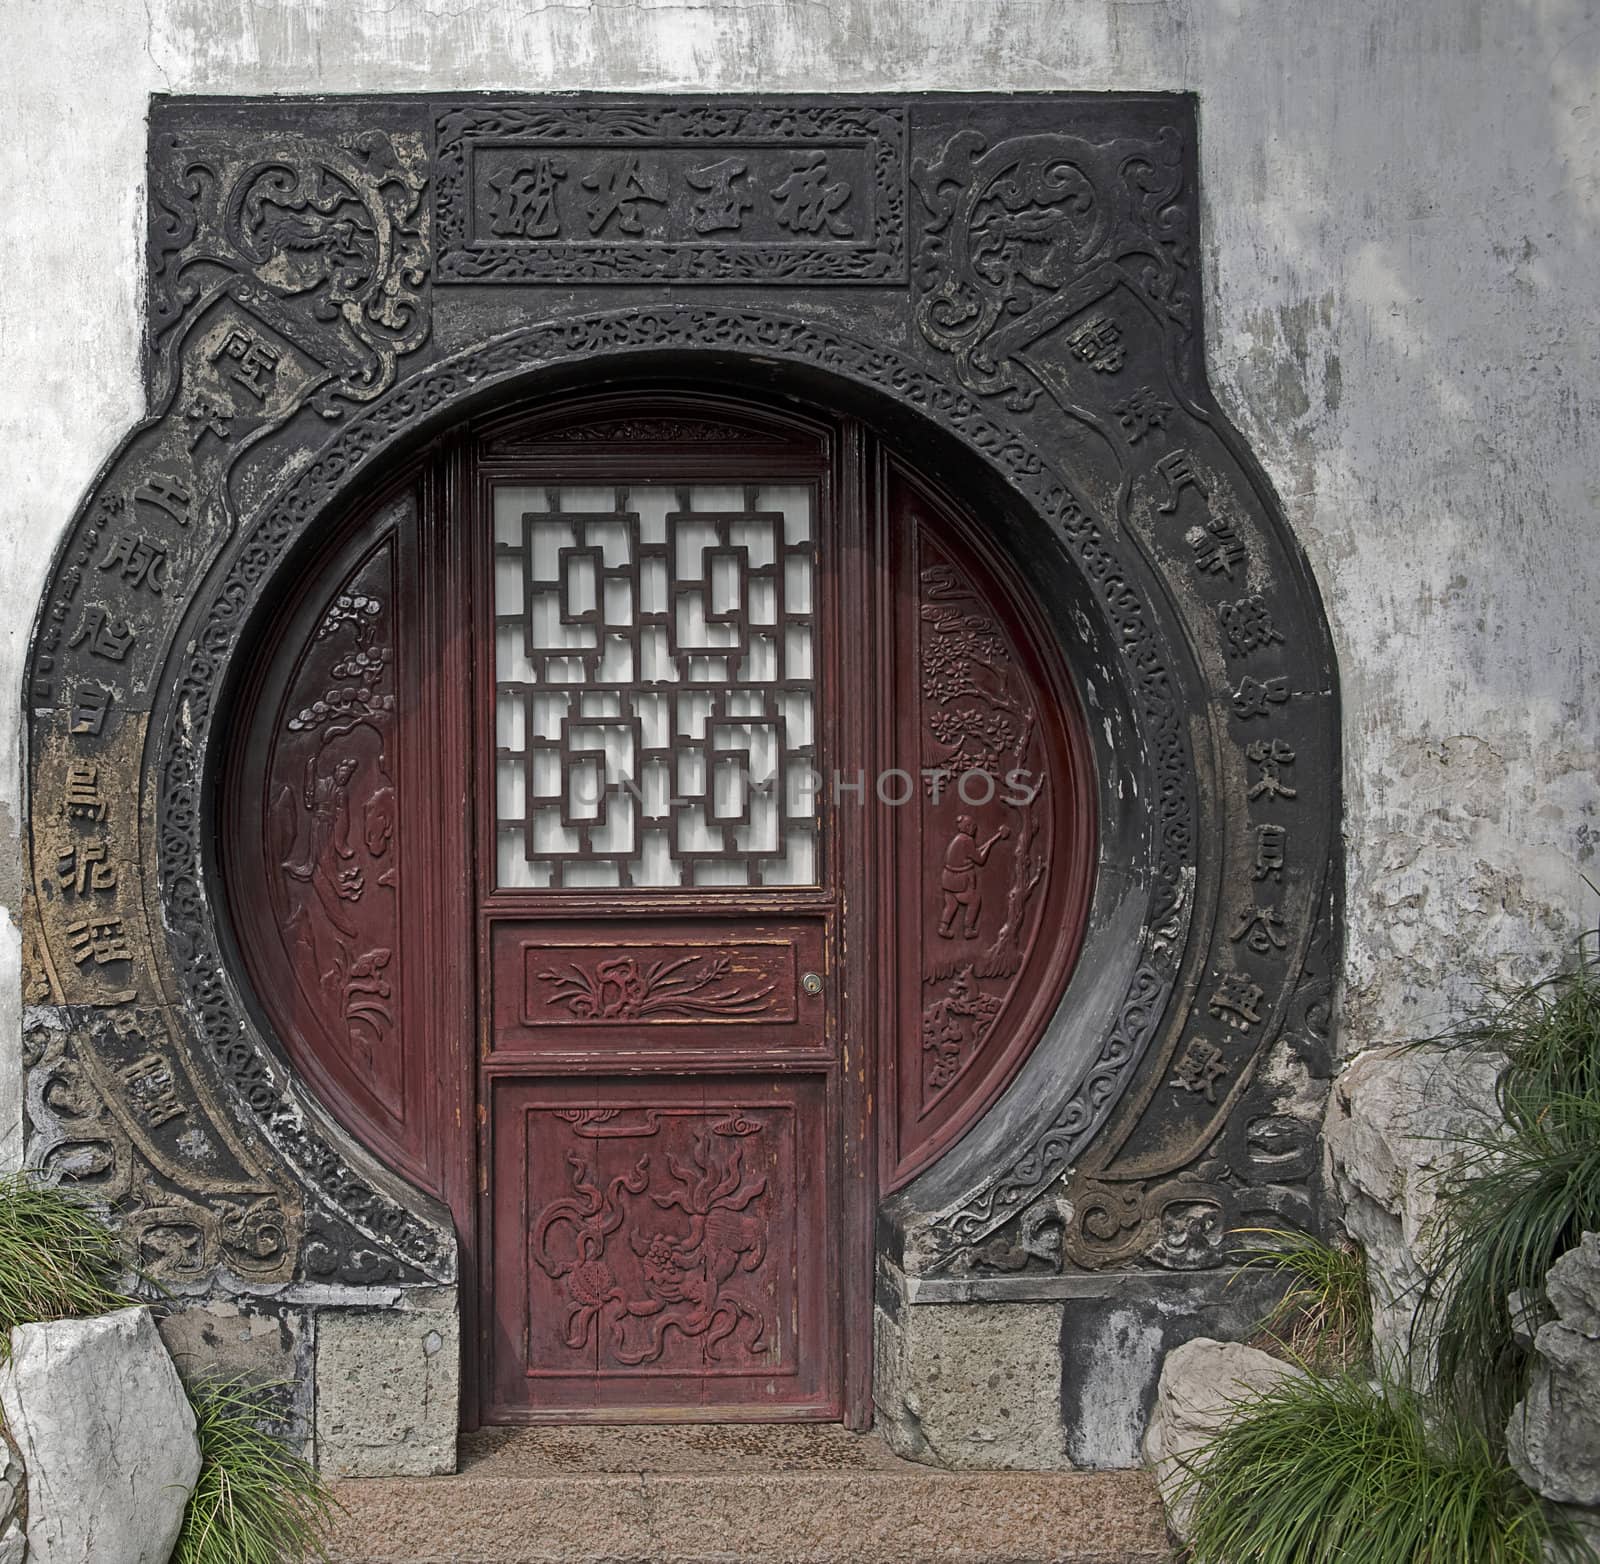 Entrance door picture taken in Shanghai China